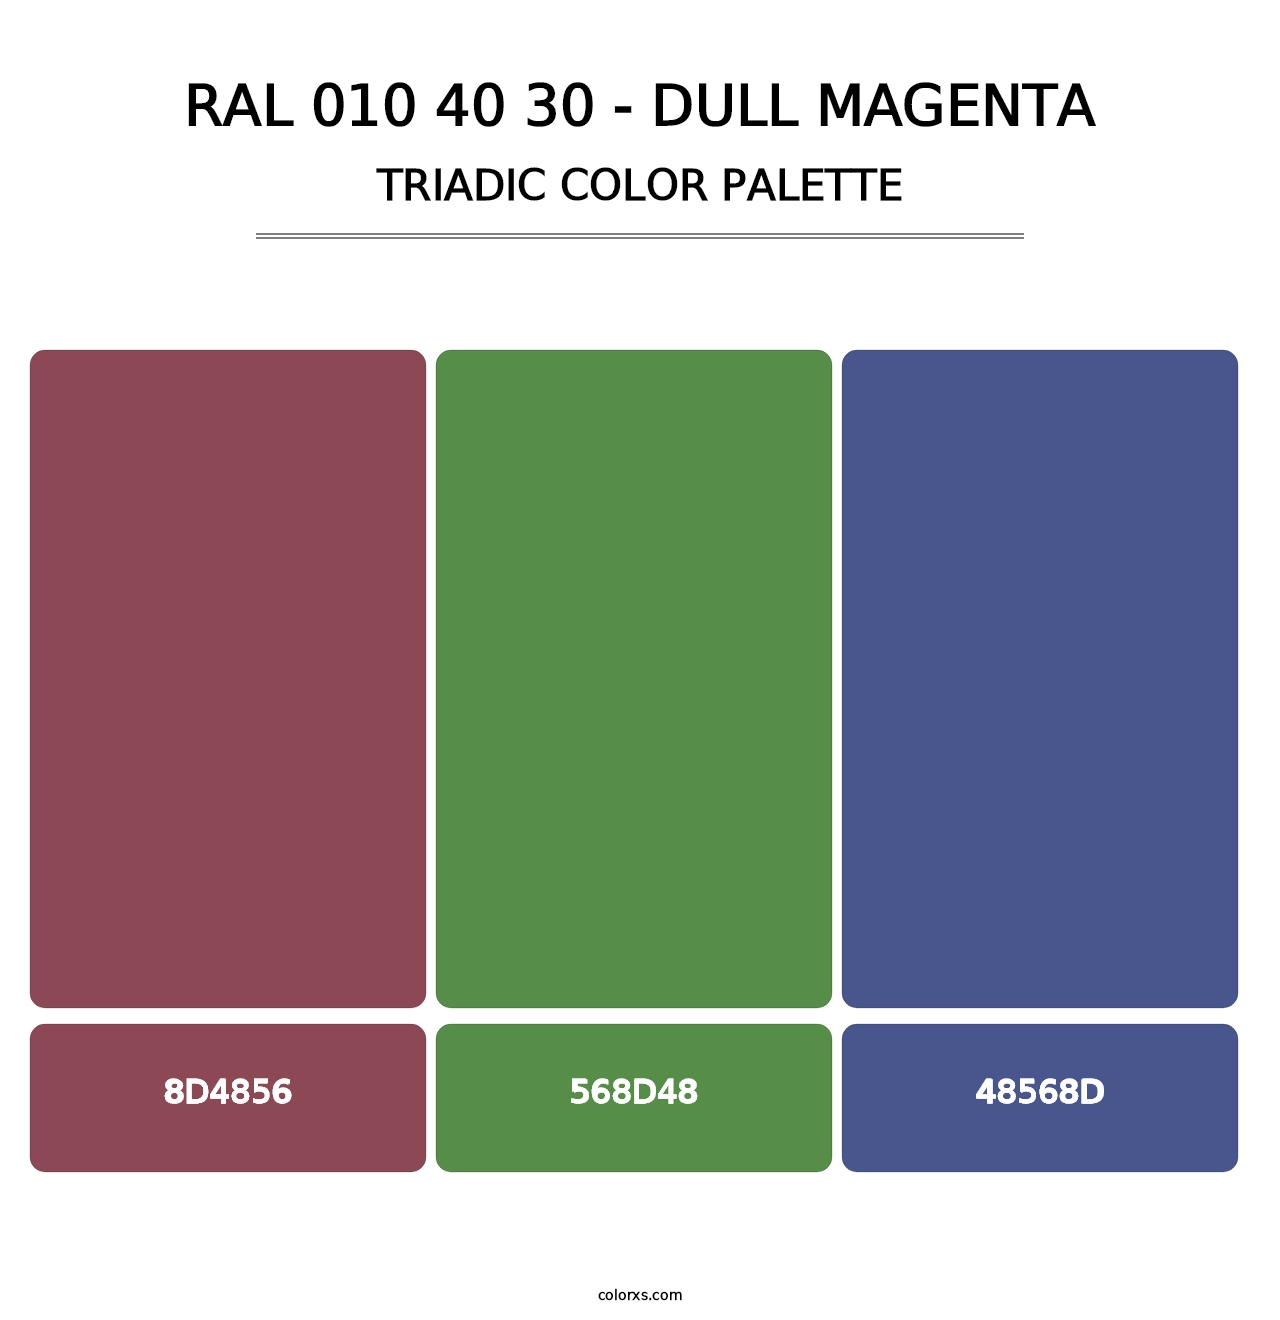 RAL 010 40 30 - Dull Magenta - Triadic Color Palette